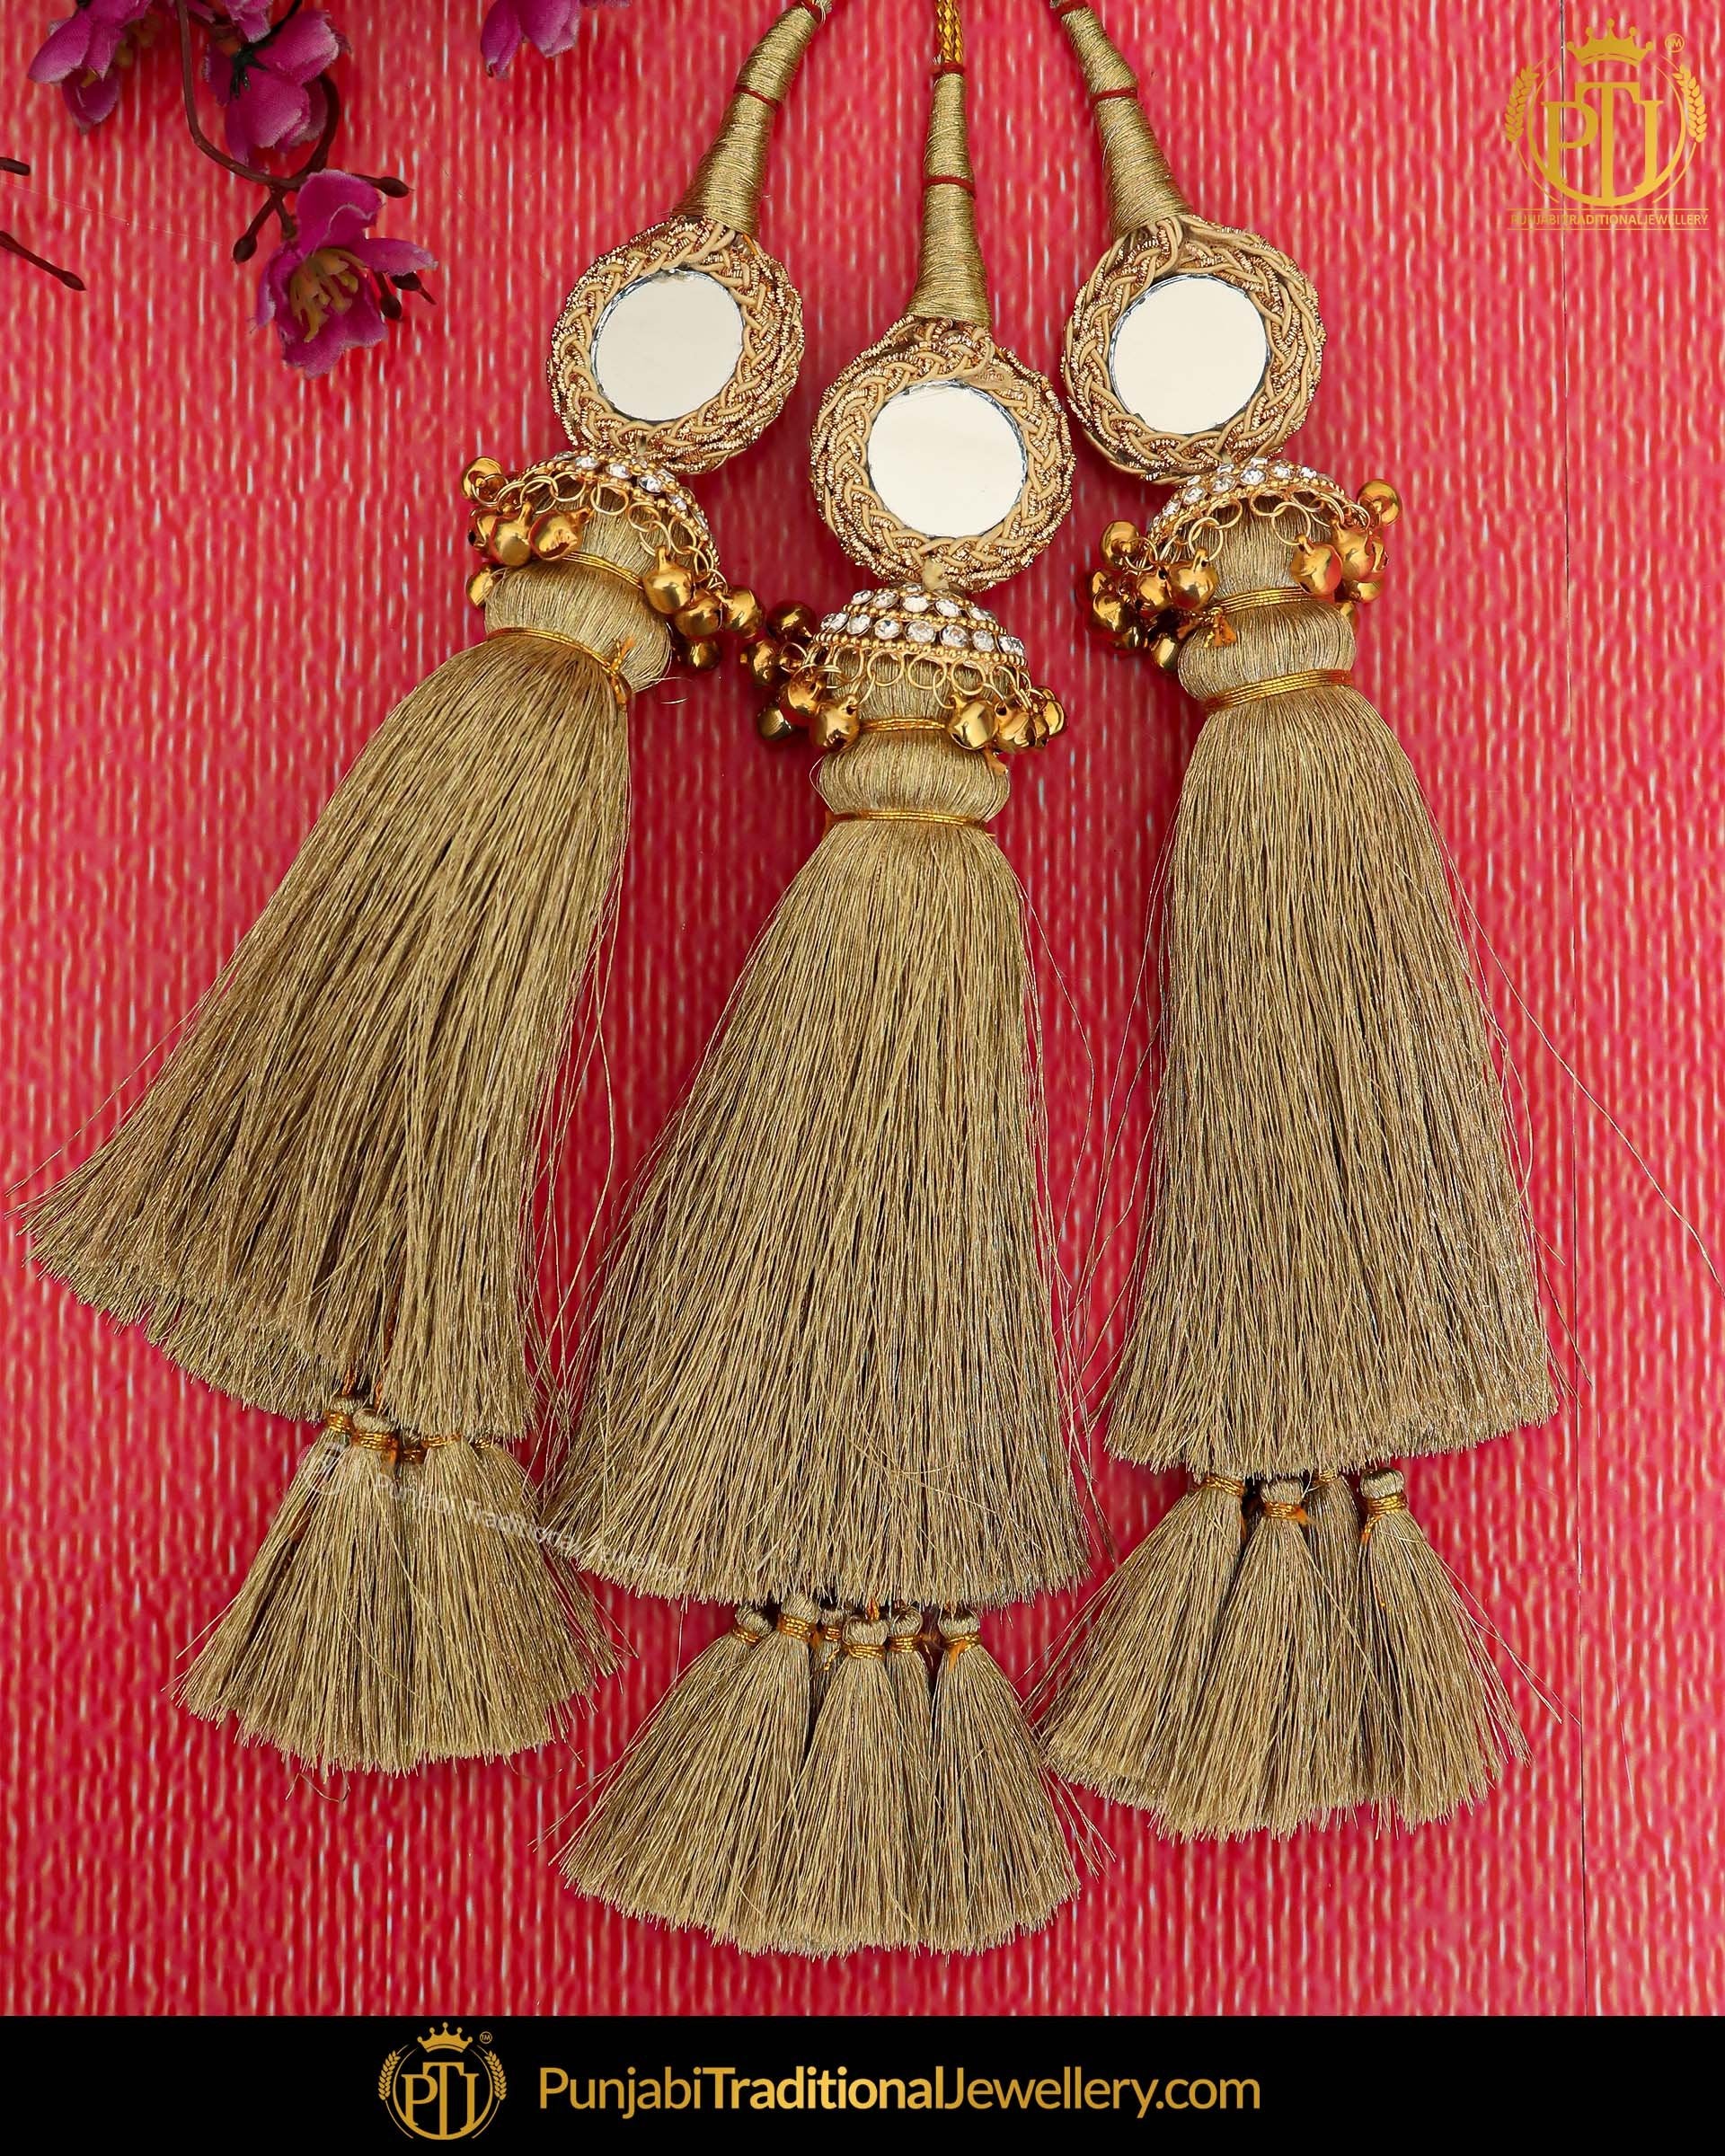 Golden Color Prandi Lottan With Mirror | Pipal Diya Peengan by Punjabi Traditional Jewellery Exclusive